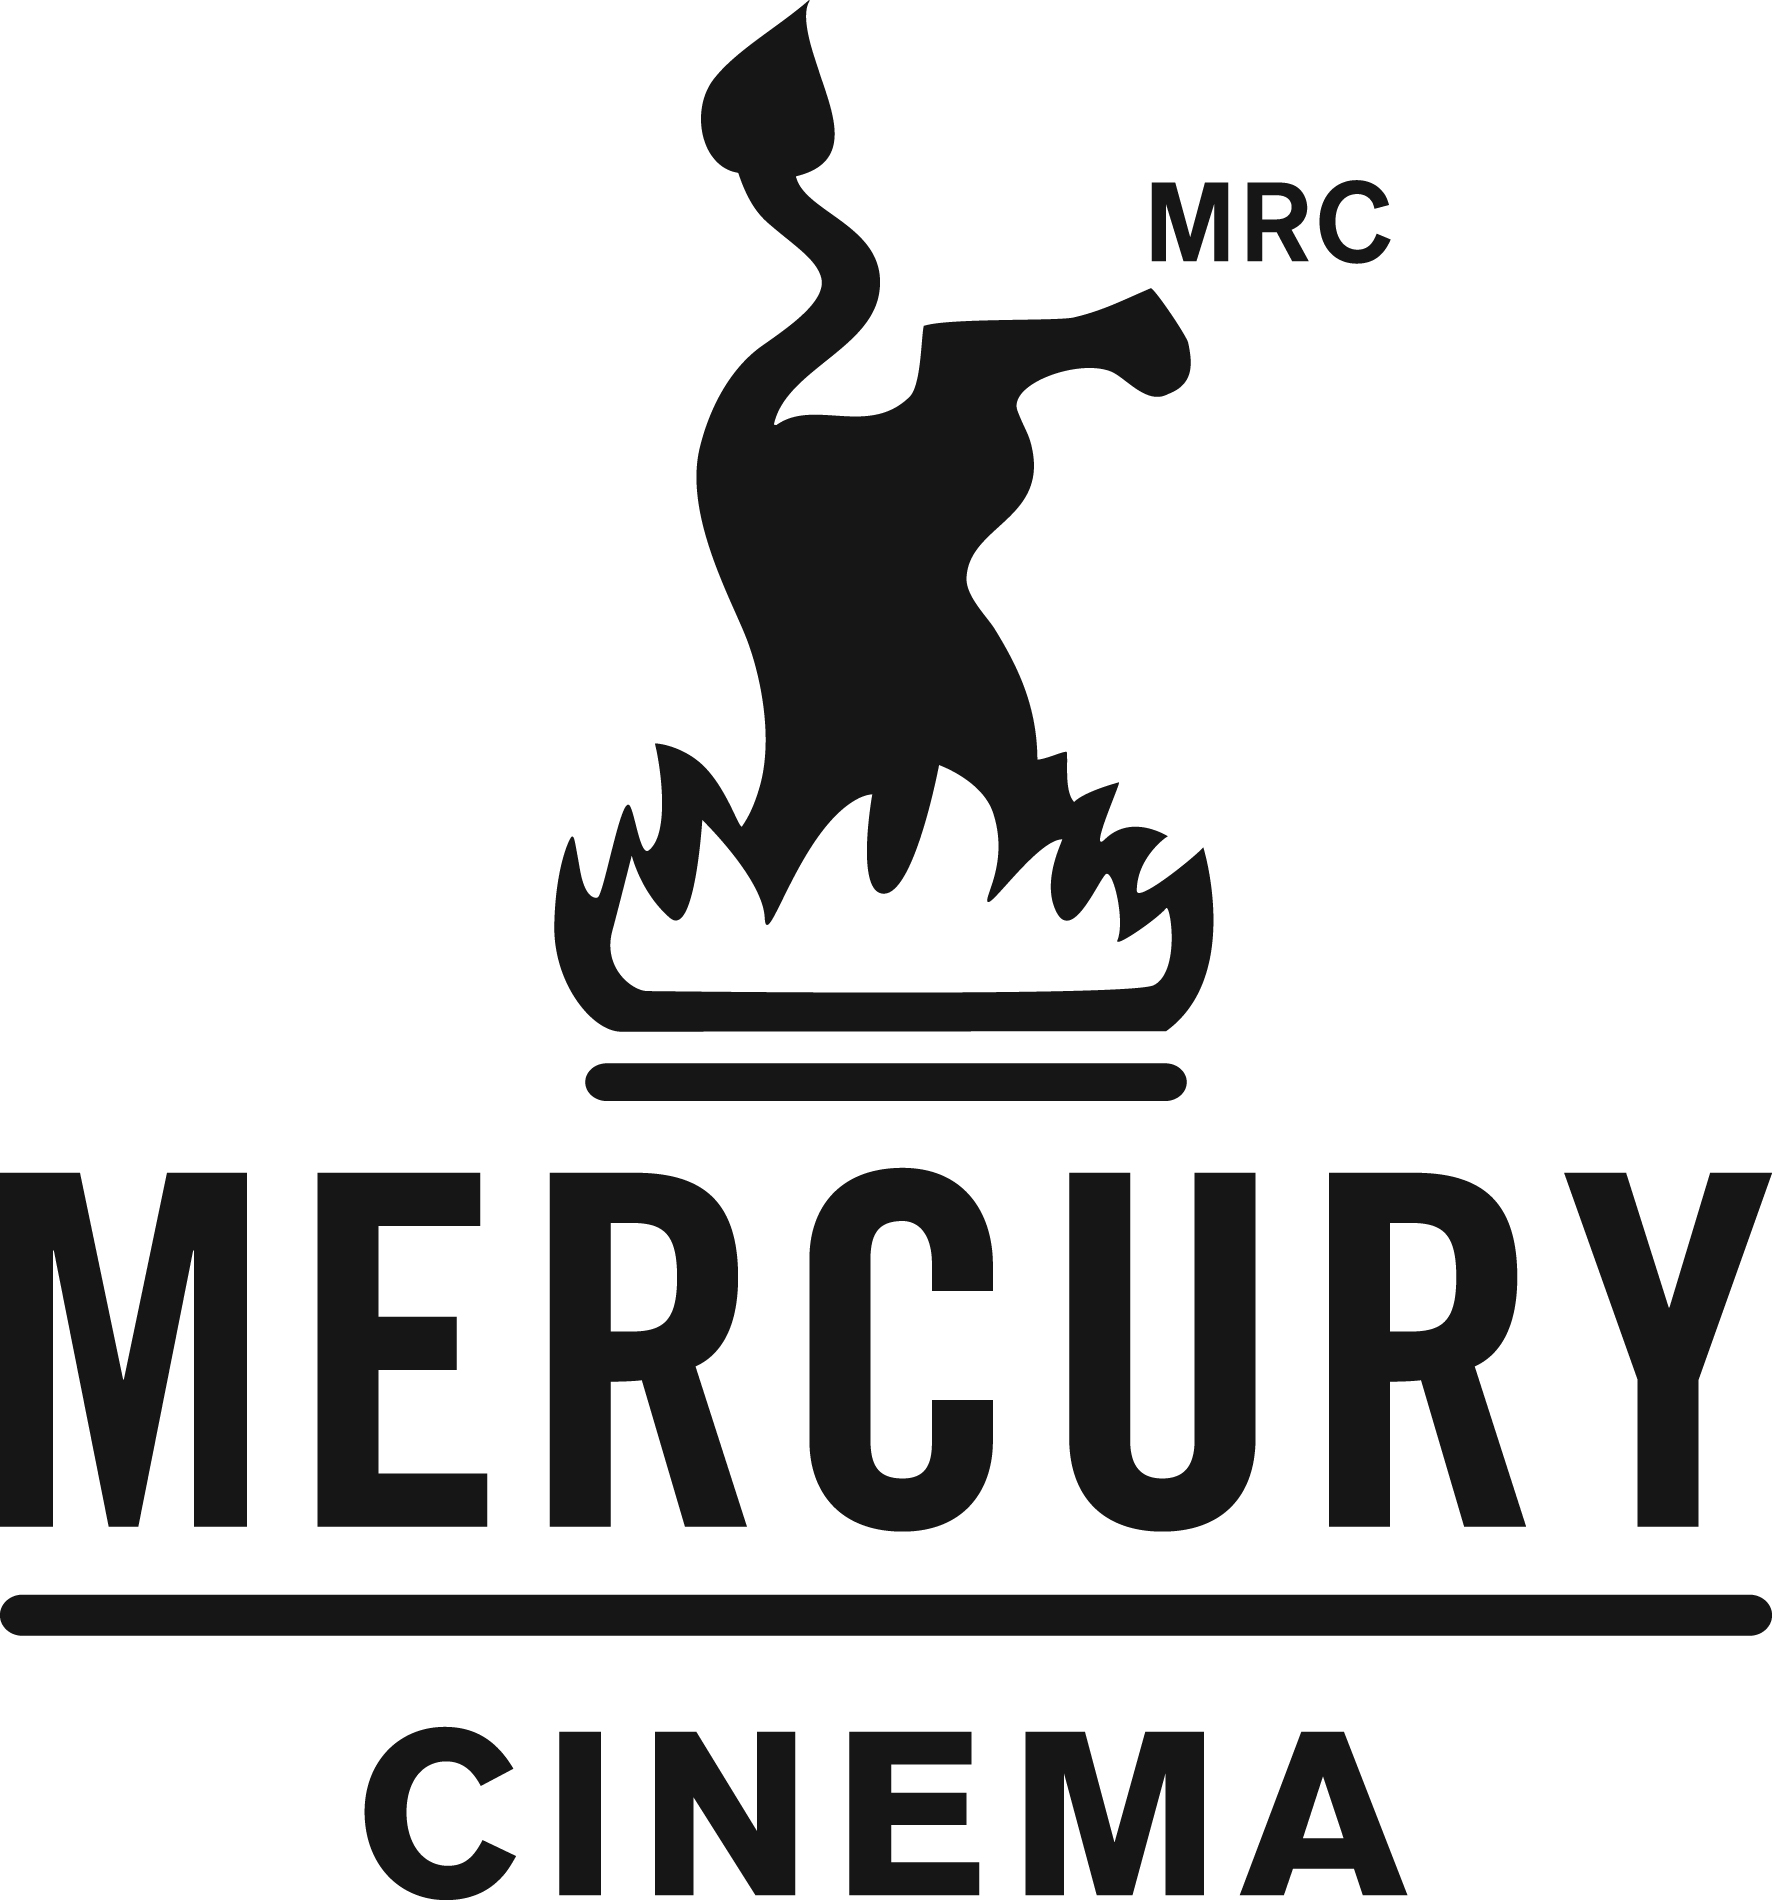 Mercury cinema